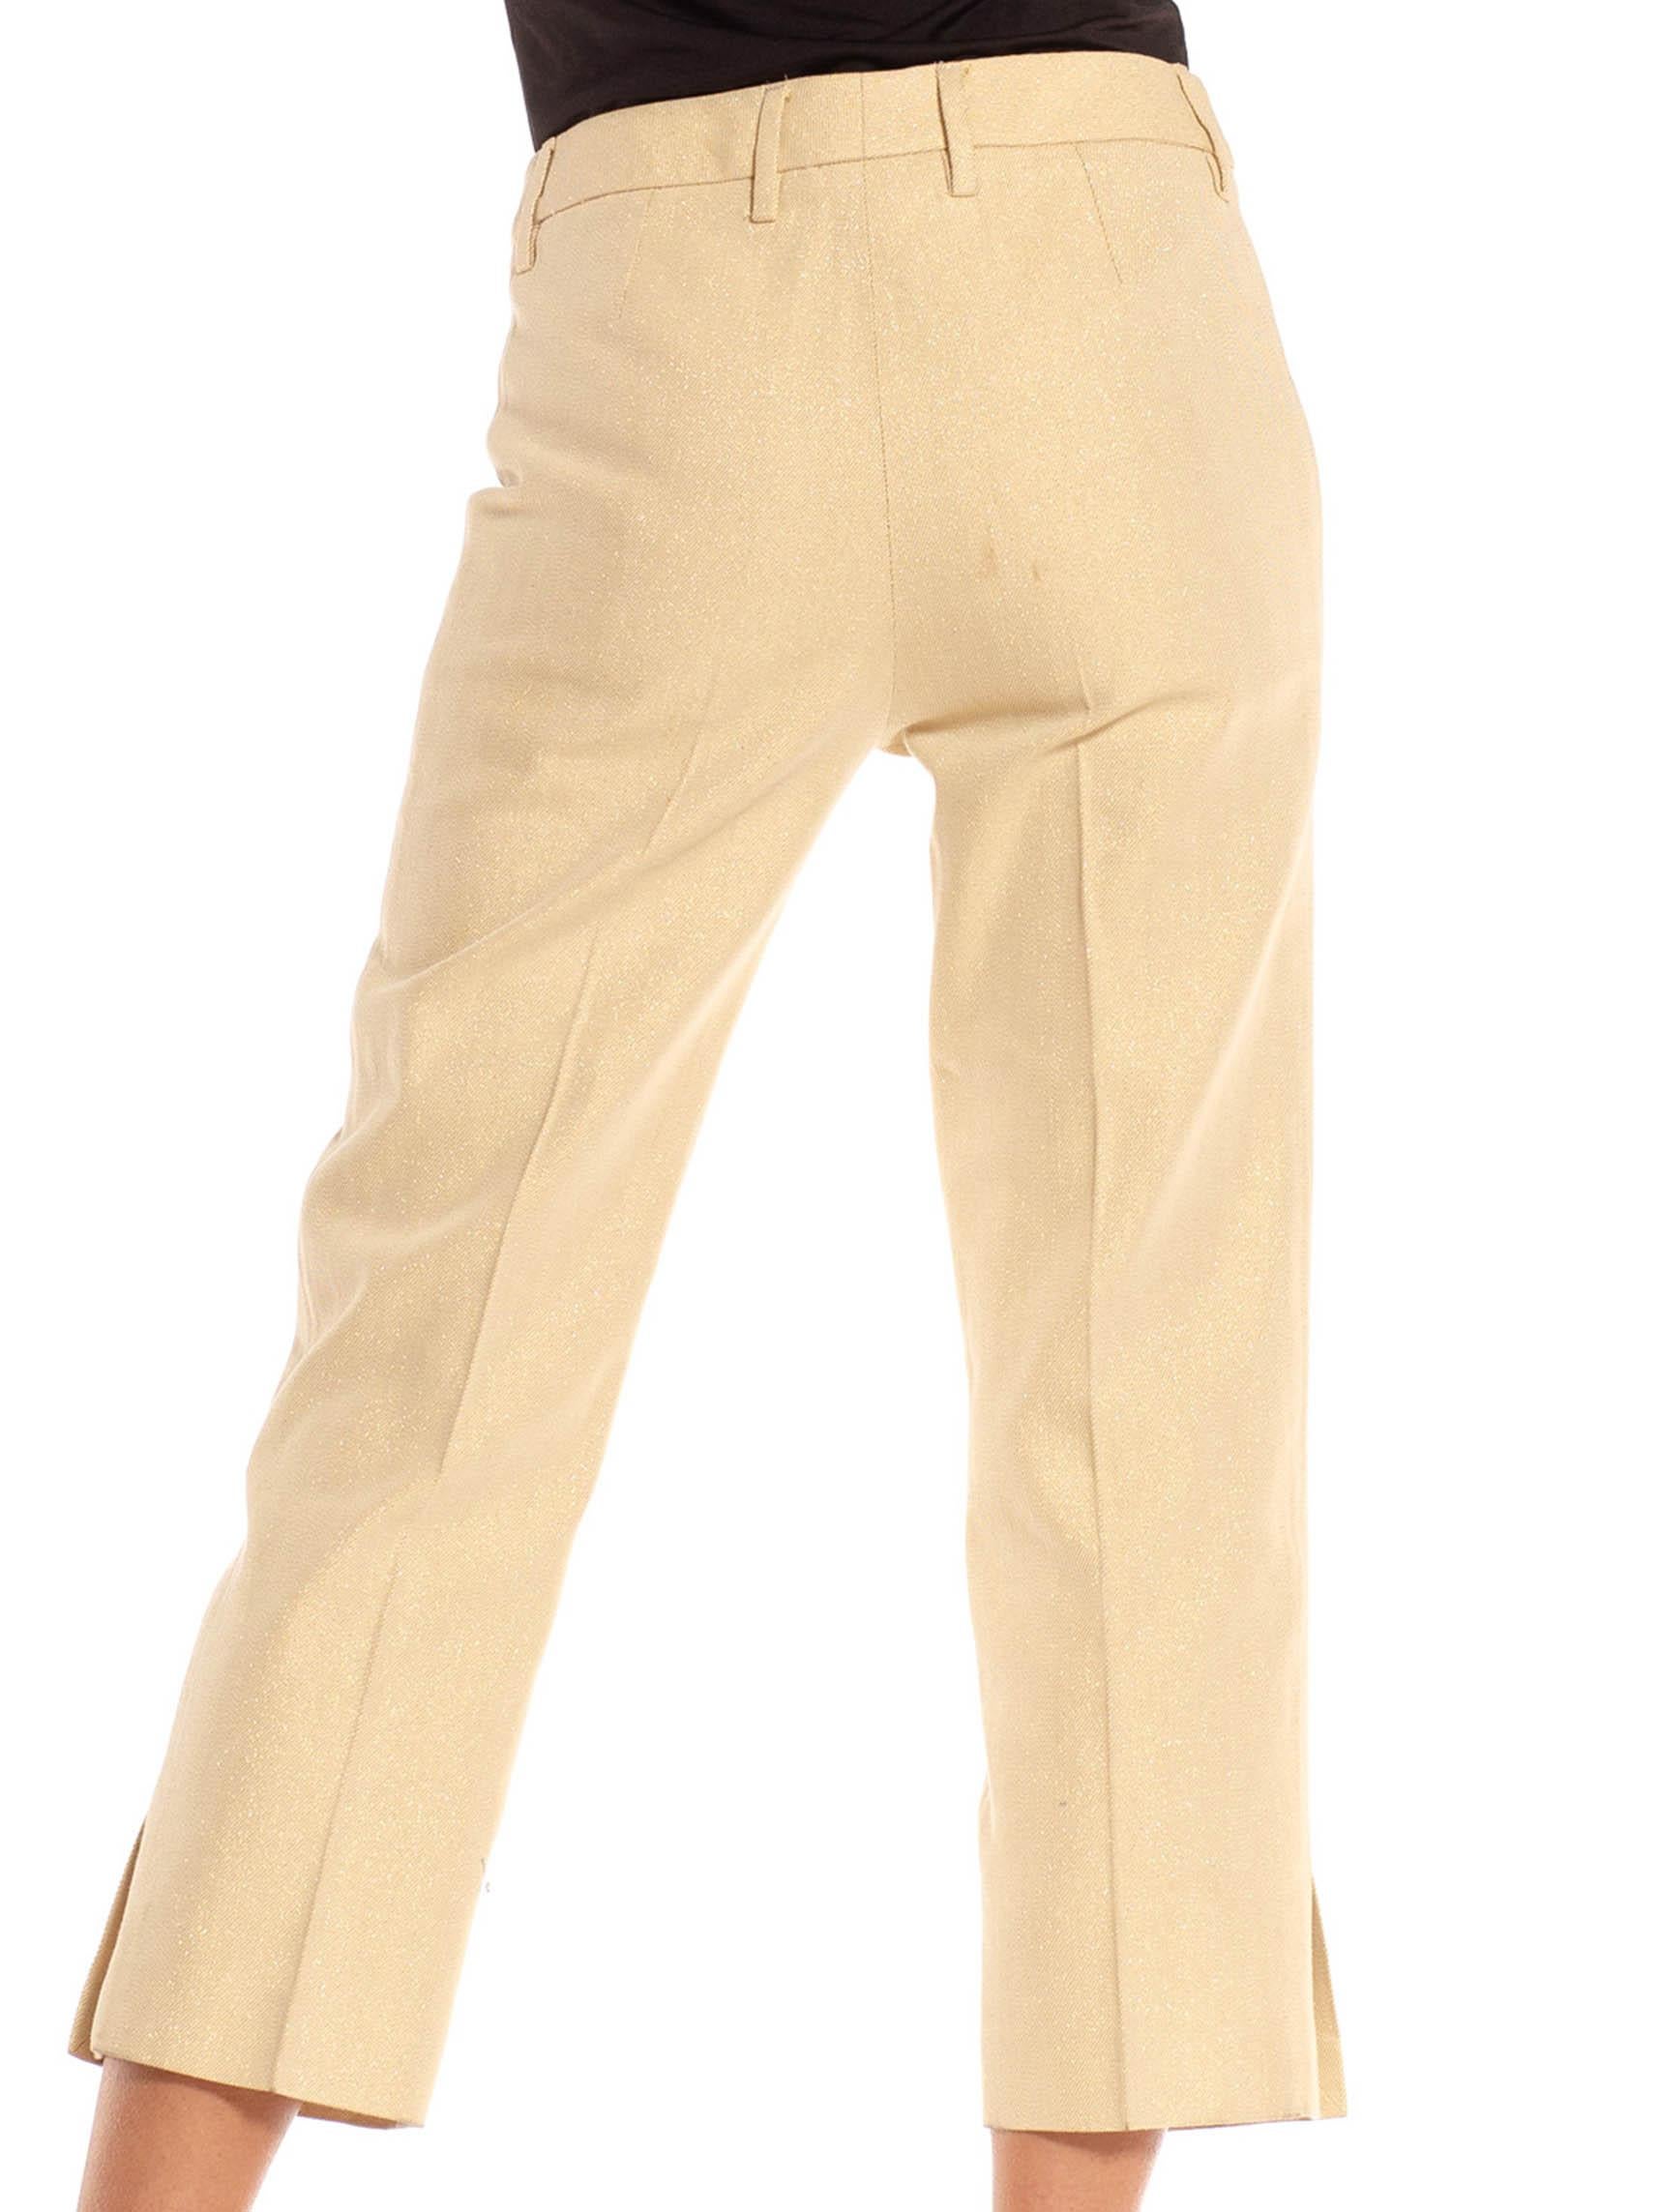 2000S Dolce & Gabbana Golden Yellow Cotton Blend Canvas Metallic Woven Pants For Sale 2